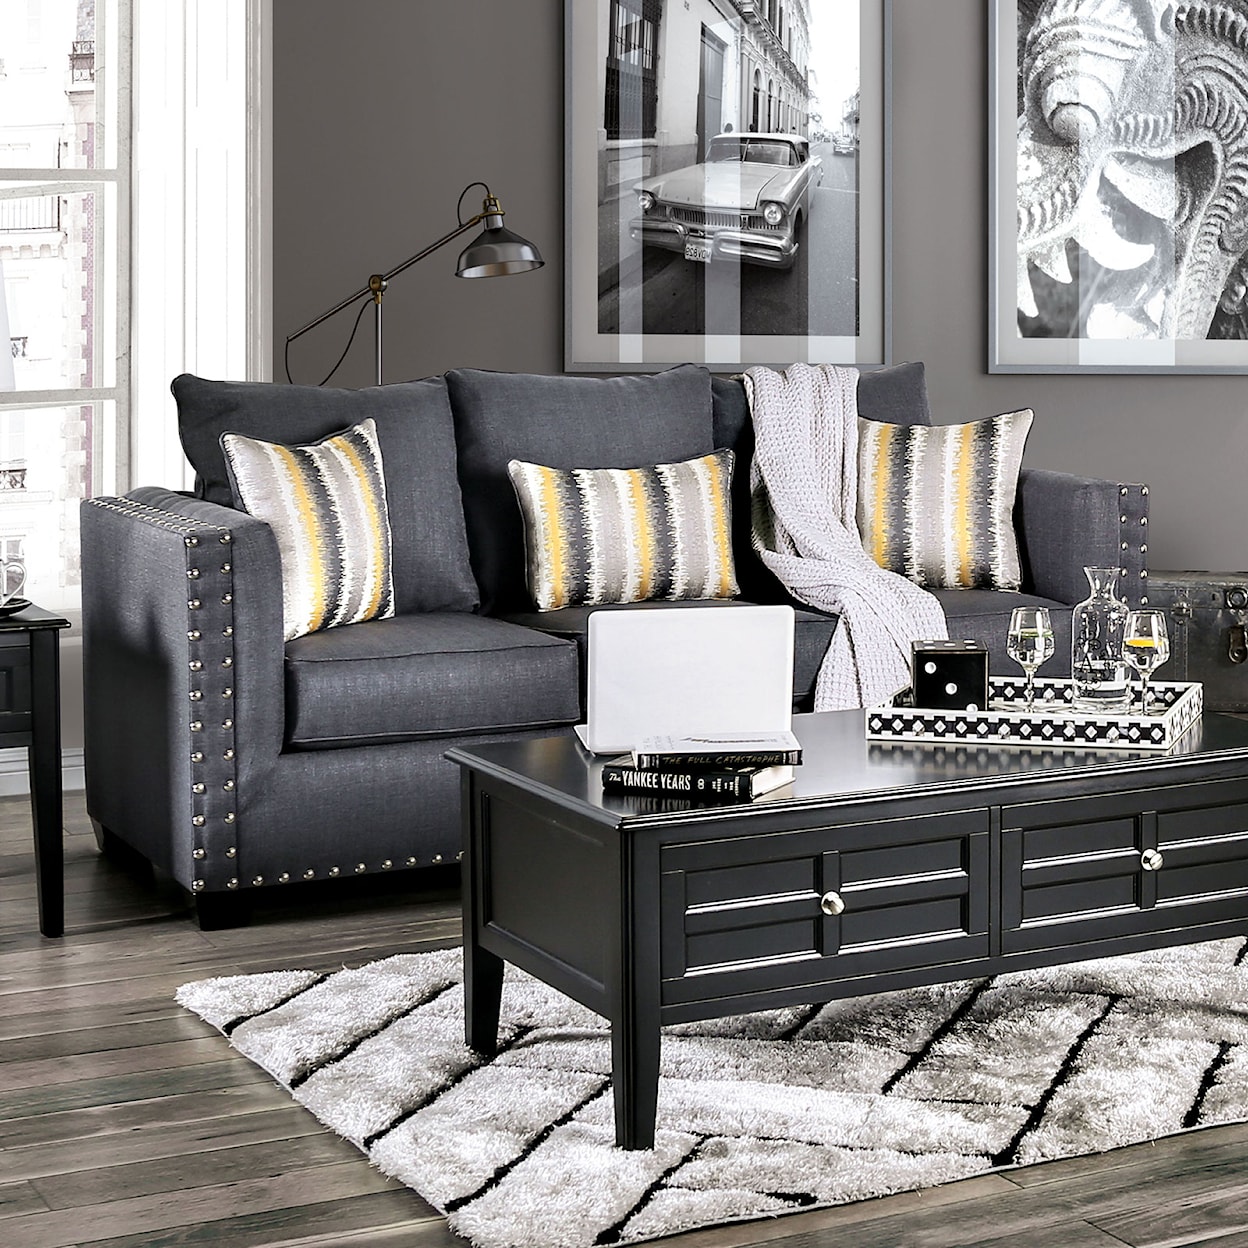 Furniture of America Inkom Sofa and Loveseat Set